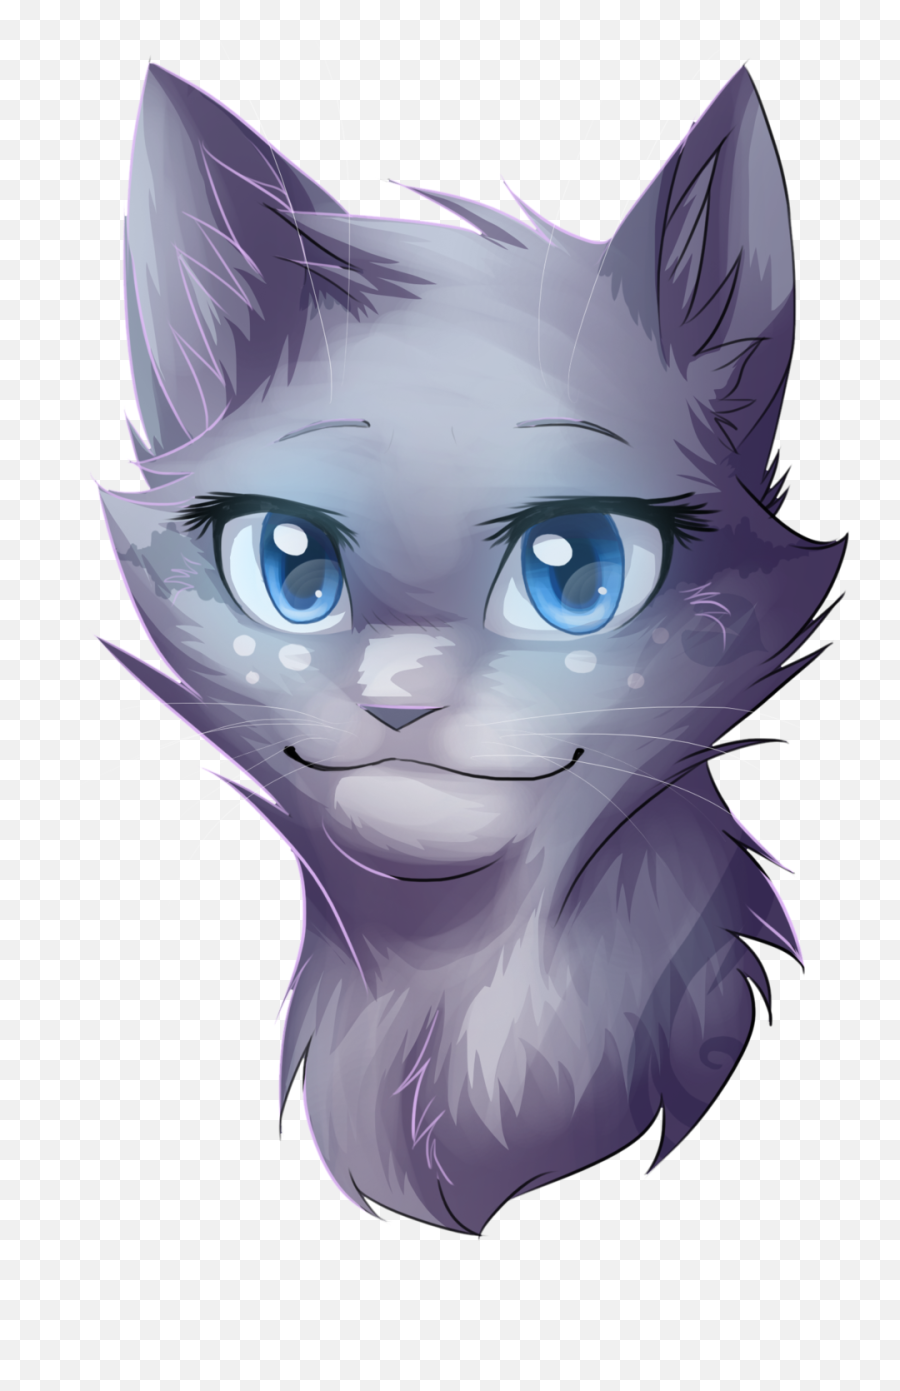 Scratch - Pale Grey Warrior Cats With Blue Eyes Emoji,Tomska In The Emoji Movie